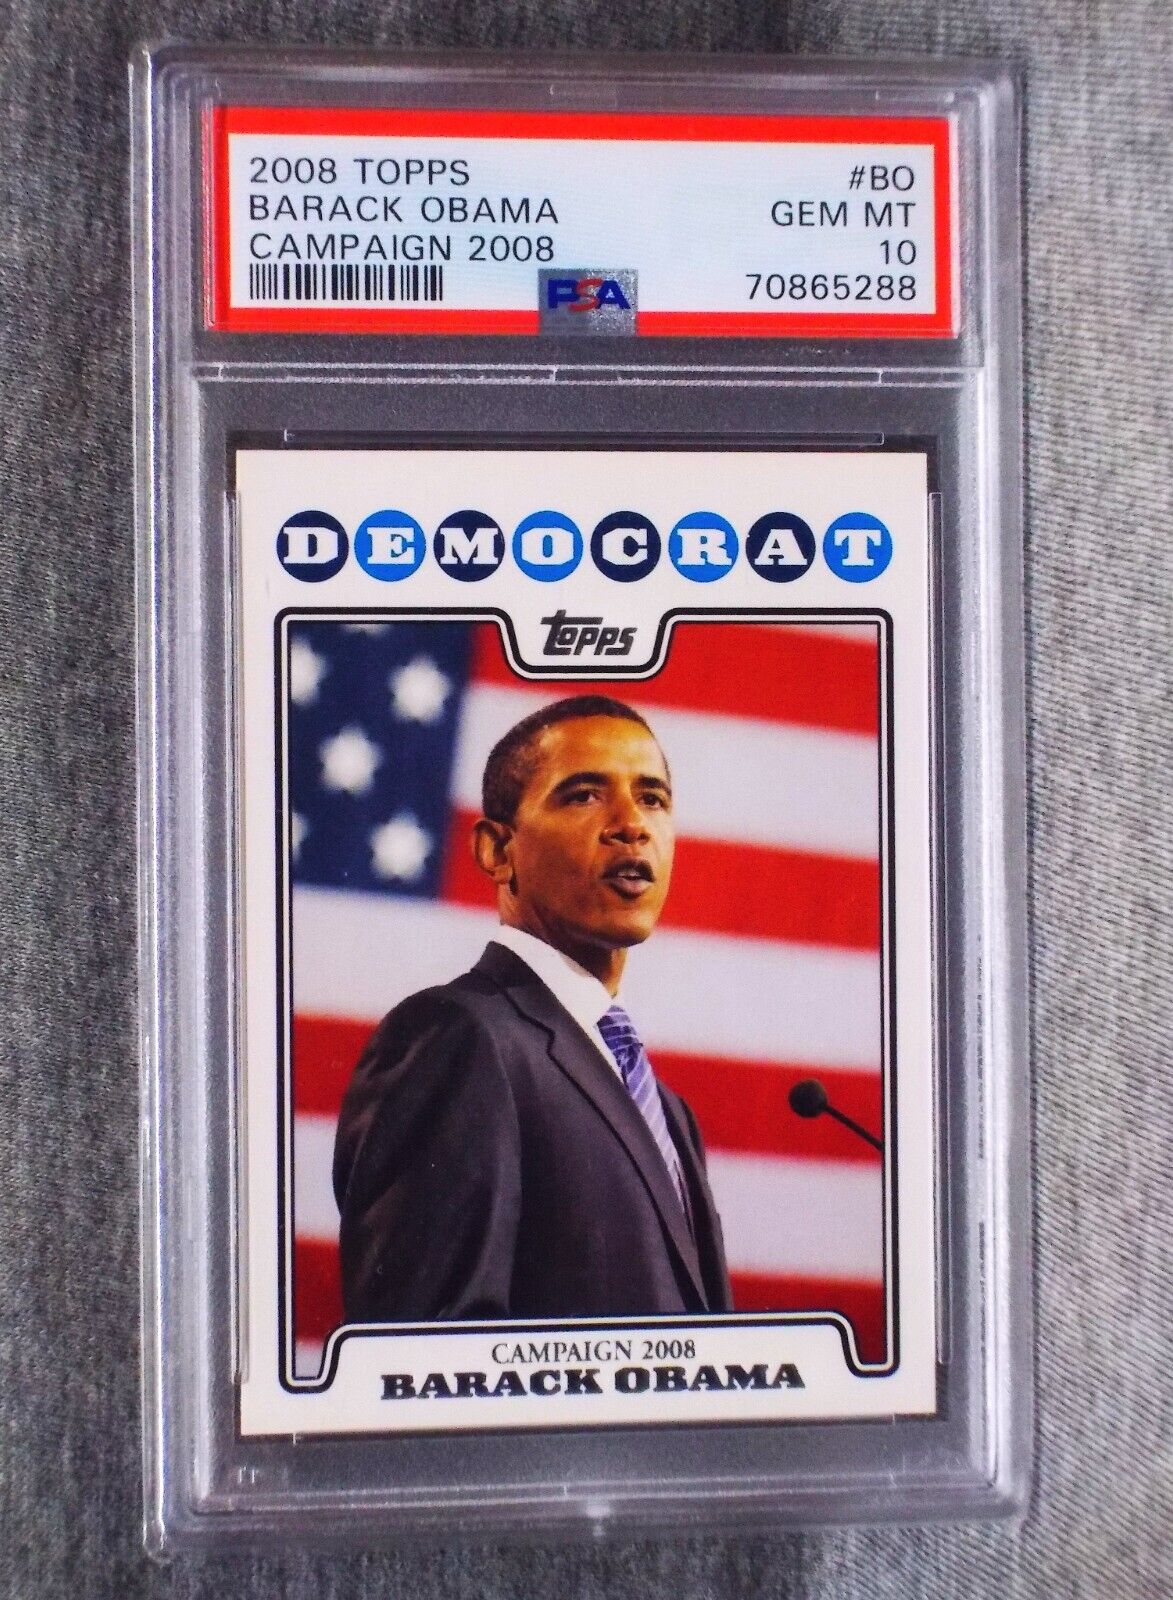 Barack Obama RC 2008 Topps Campaign Democrat ROOKIE card 🔥 GEM MINT 10 low pop